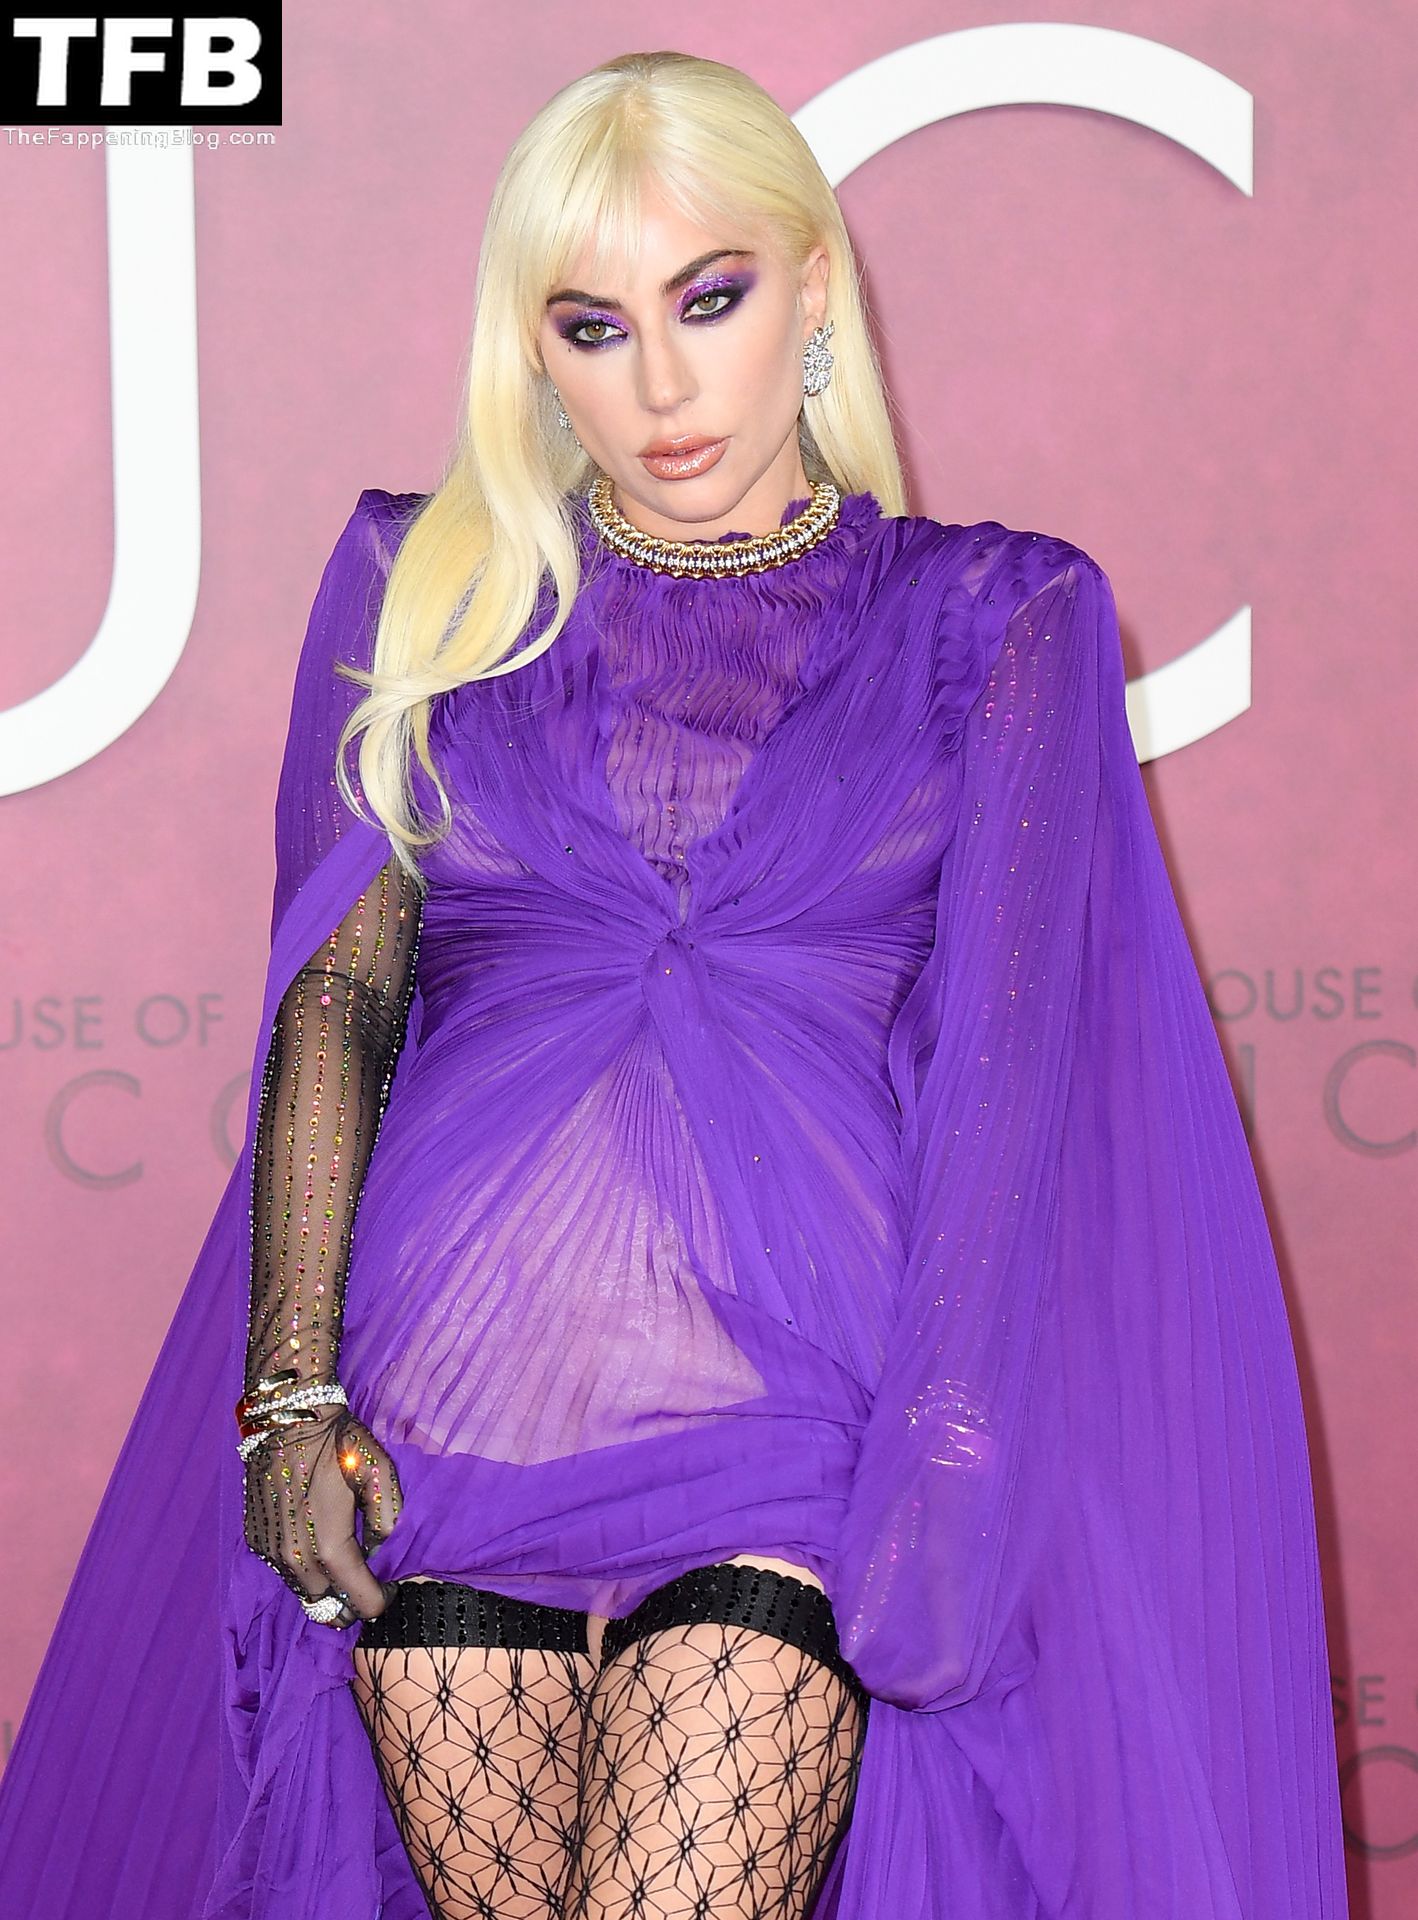 Lady-Gaga-Sexy-The-Fappening-Blog-115.jpg